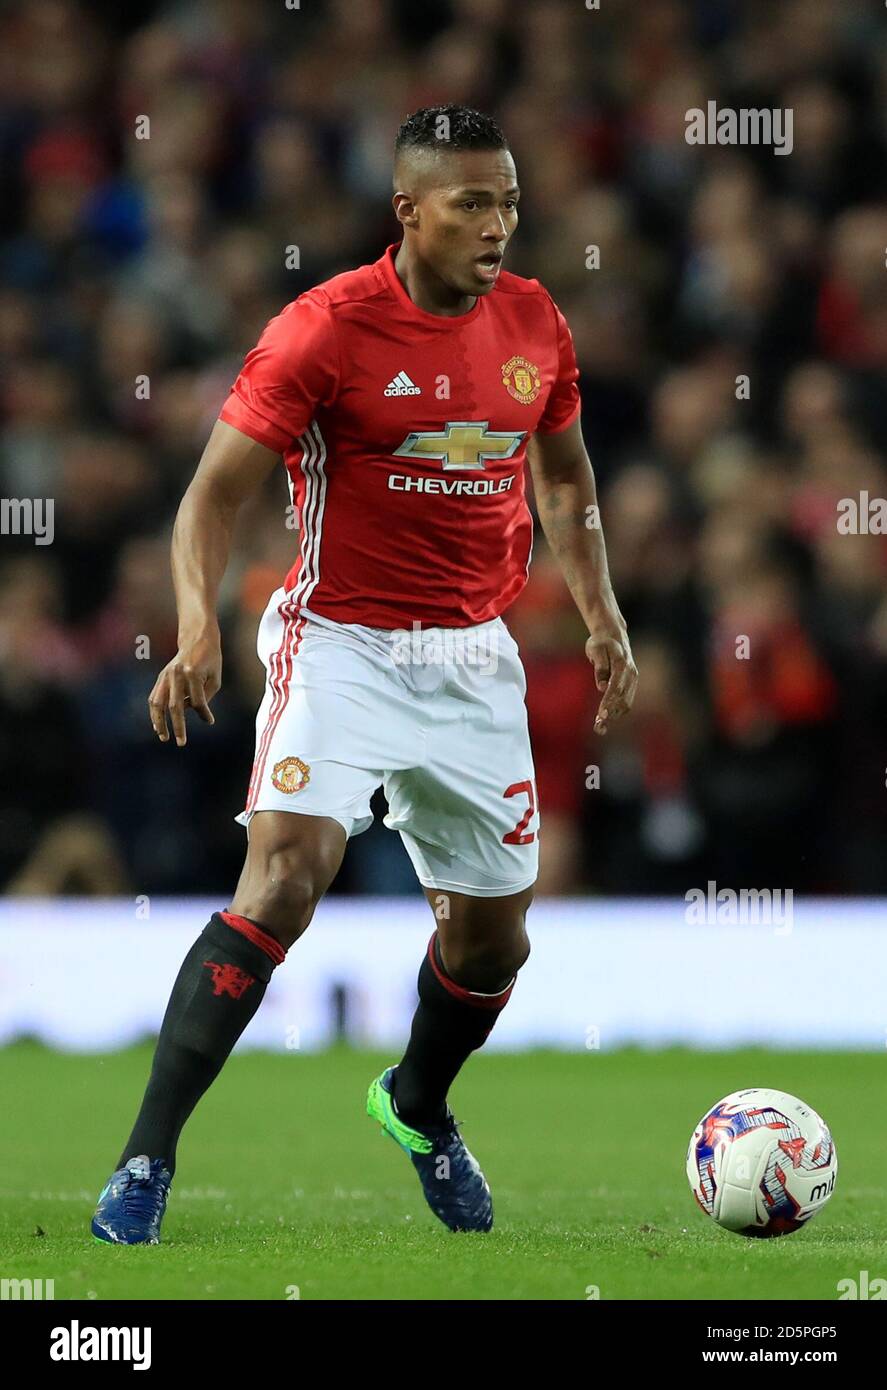 Manchester United's Luis Antonio Valencia in action. Stock Photo